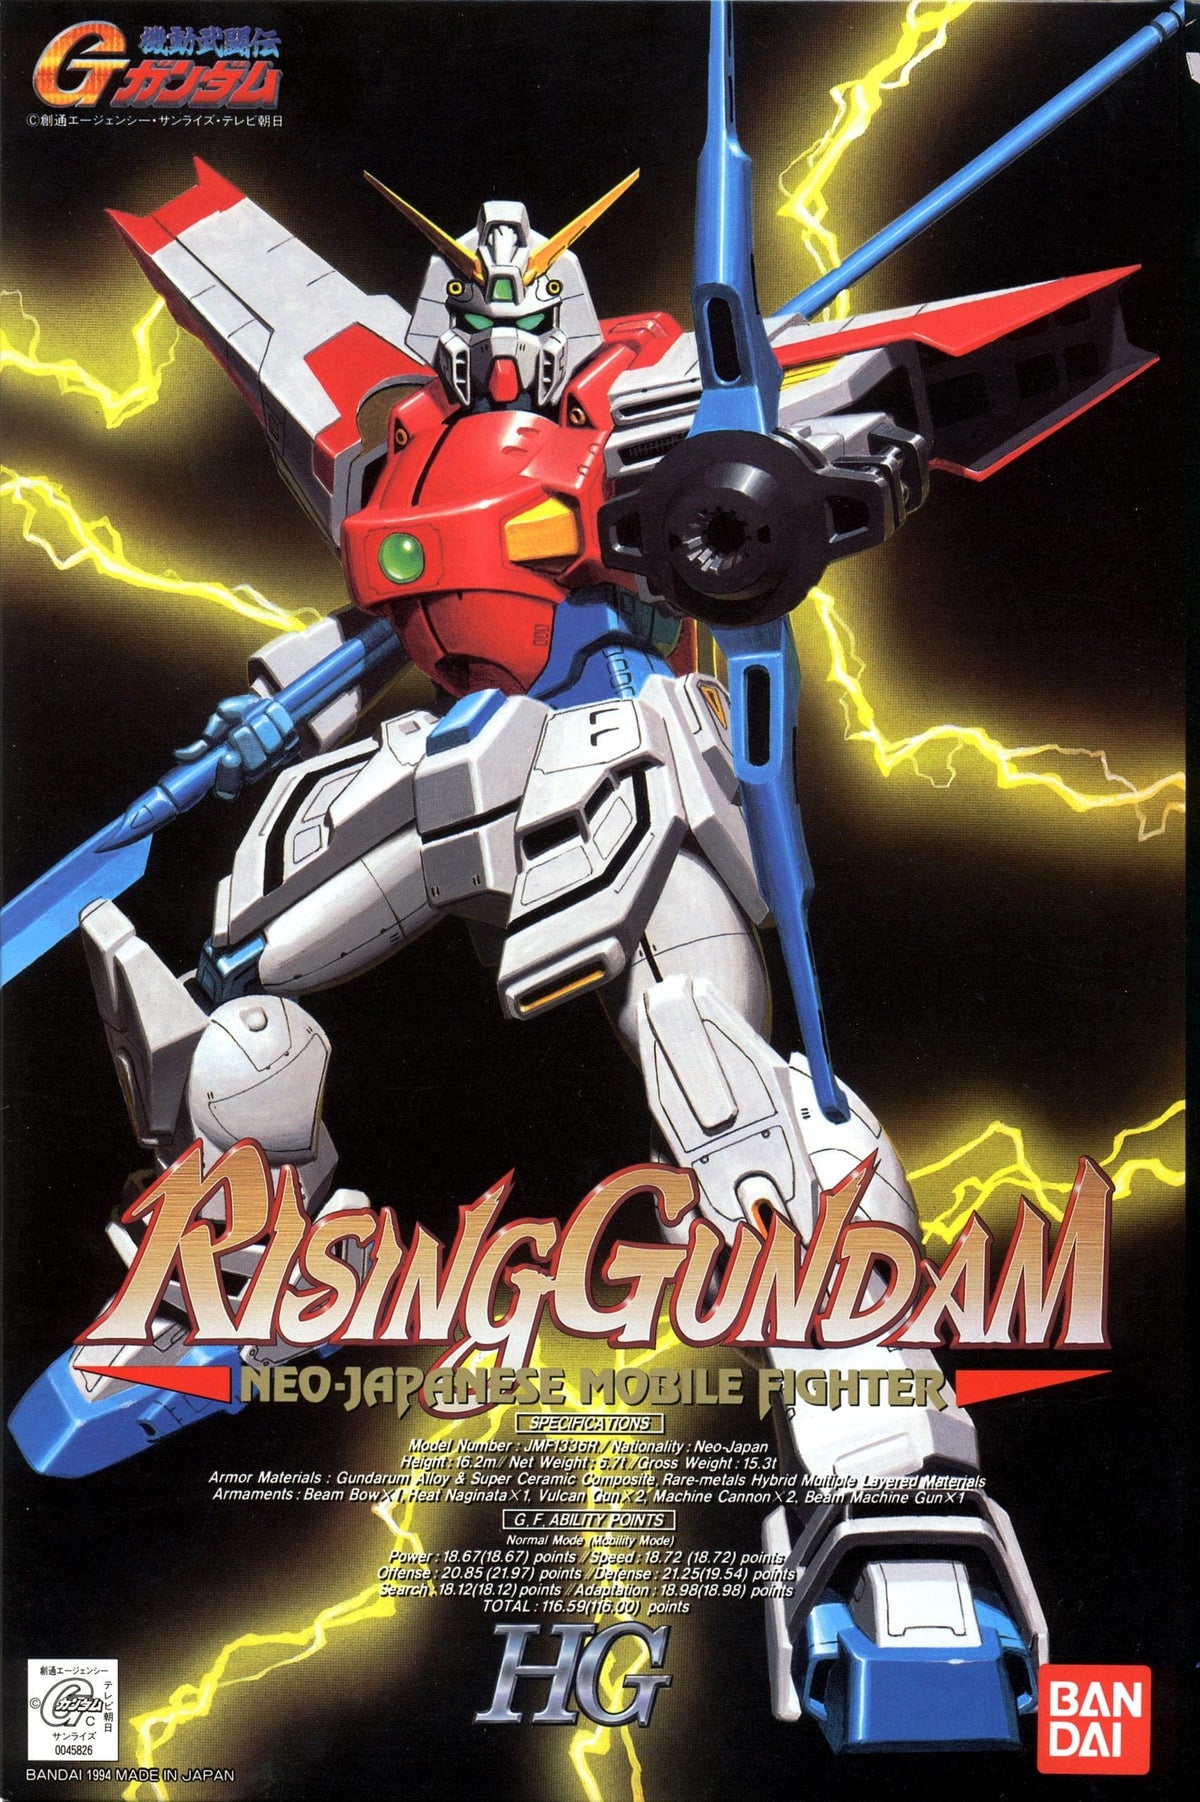 Bandai: Gundam G - Rising Gundam - Third Eye